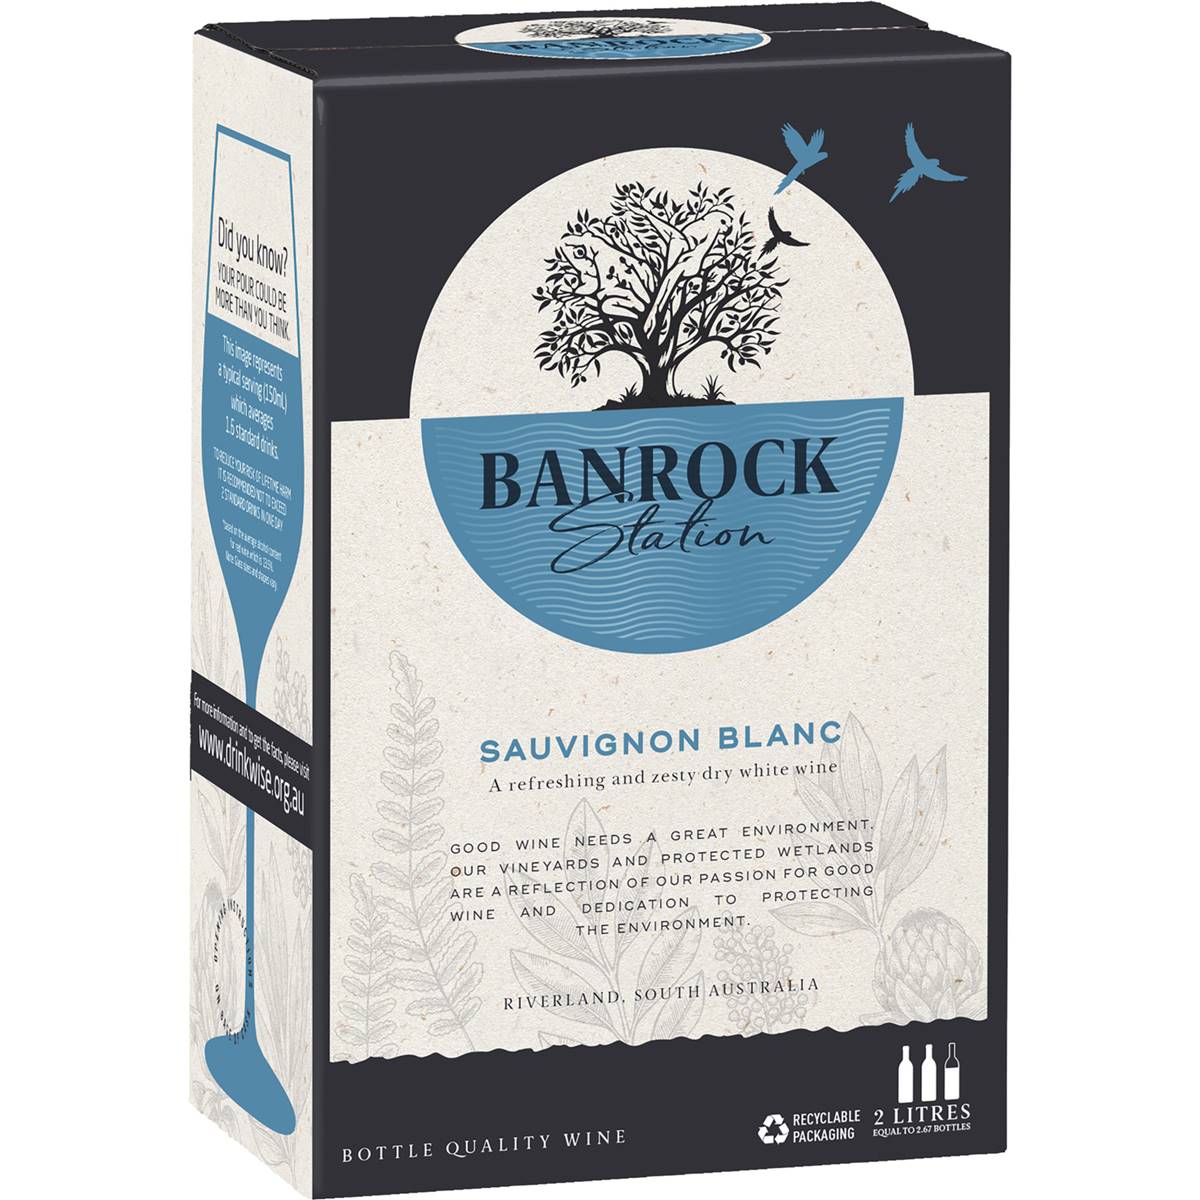 Calories in Banrock Station Cask Wine Sauvignon Blanc